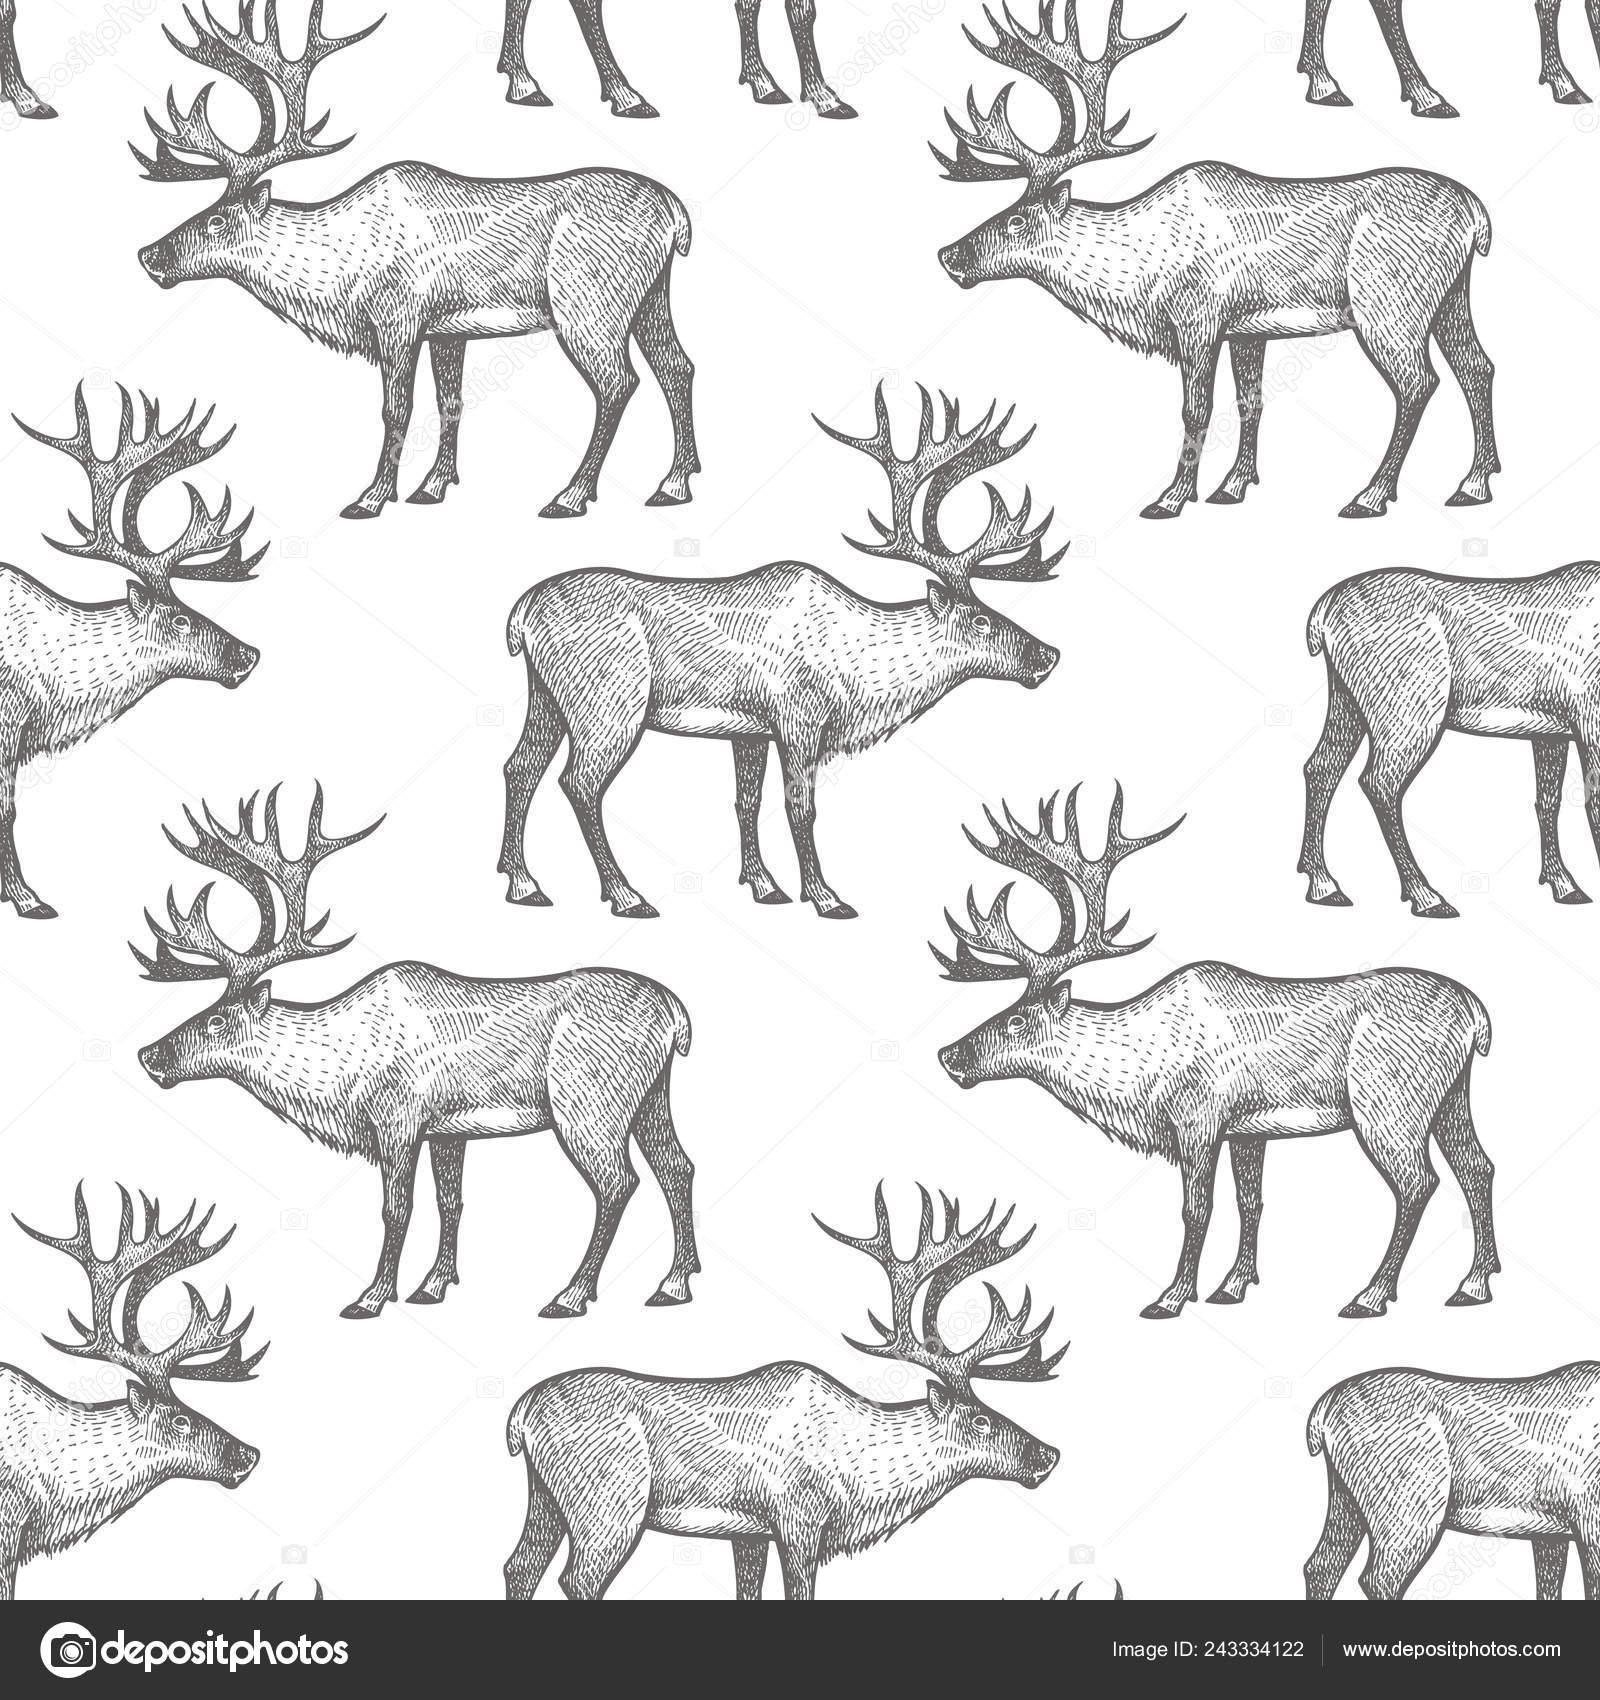 https://st4.depositphotos.com/2595103/24333/v/1600/depositphotos_243334122-stock-illustration-reindeer-seamless-pattern-animals-north.jpg